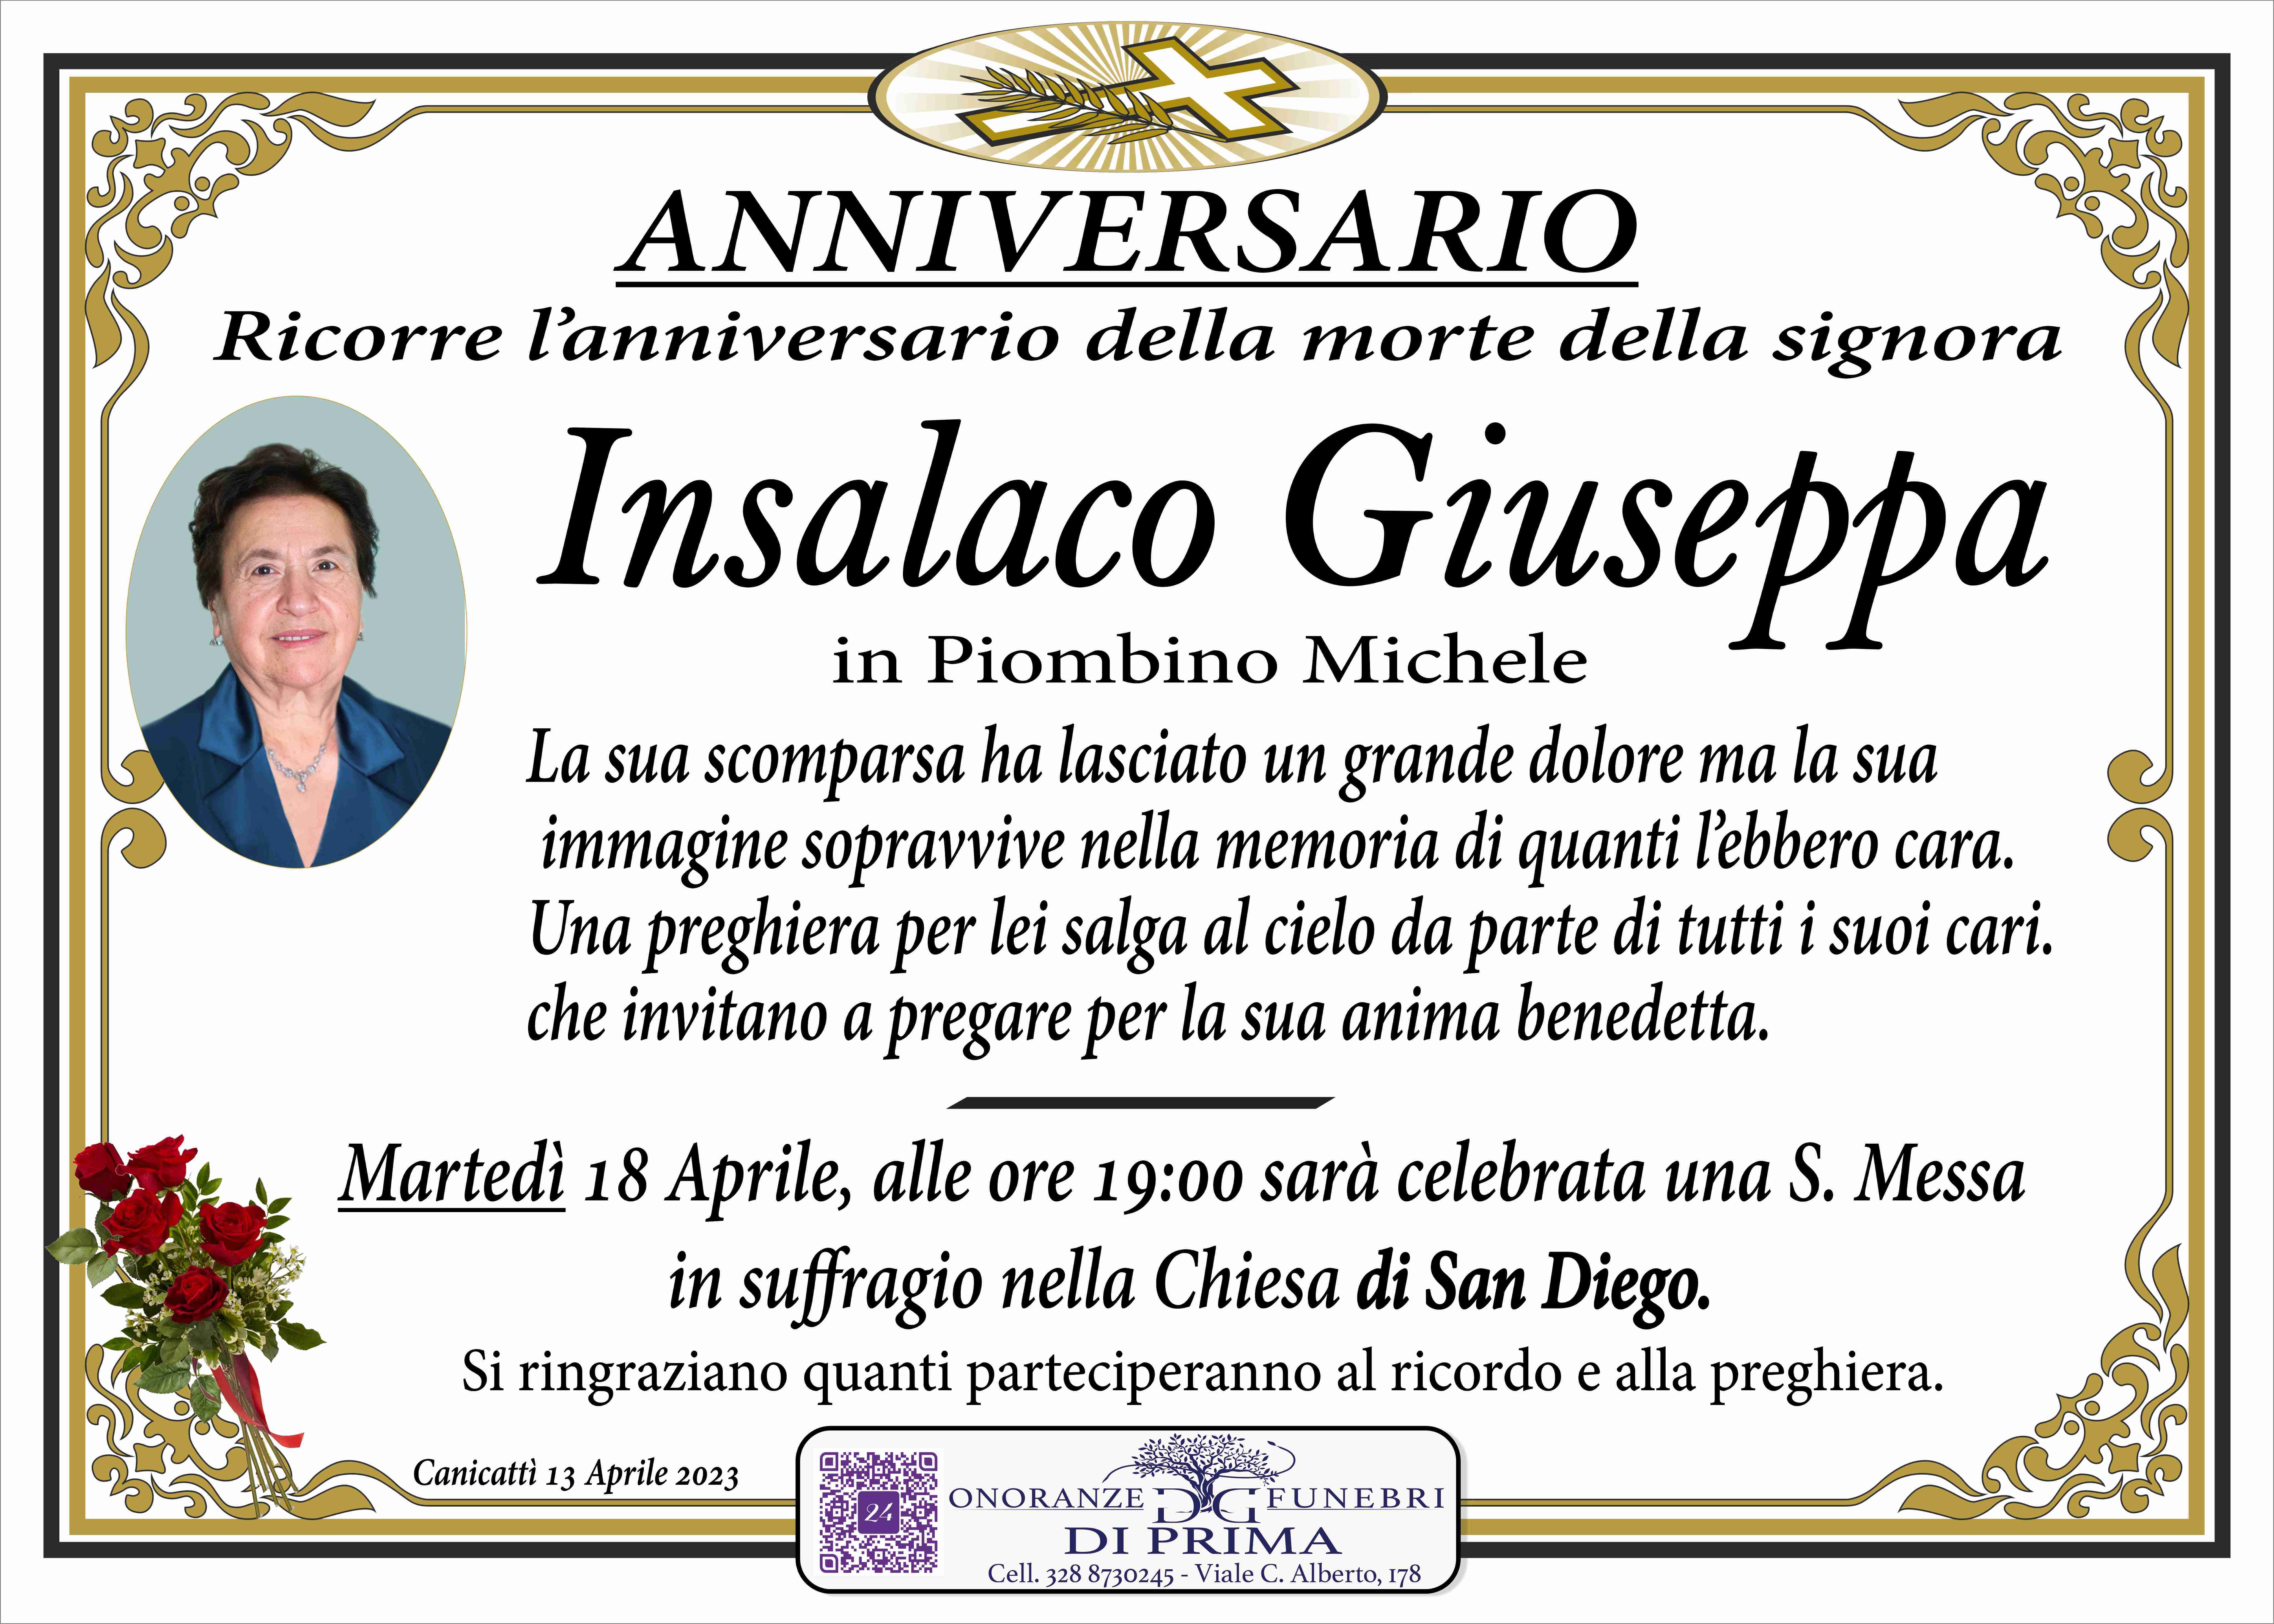 Giuseppa Insalaco